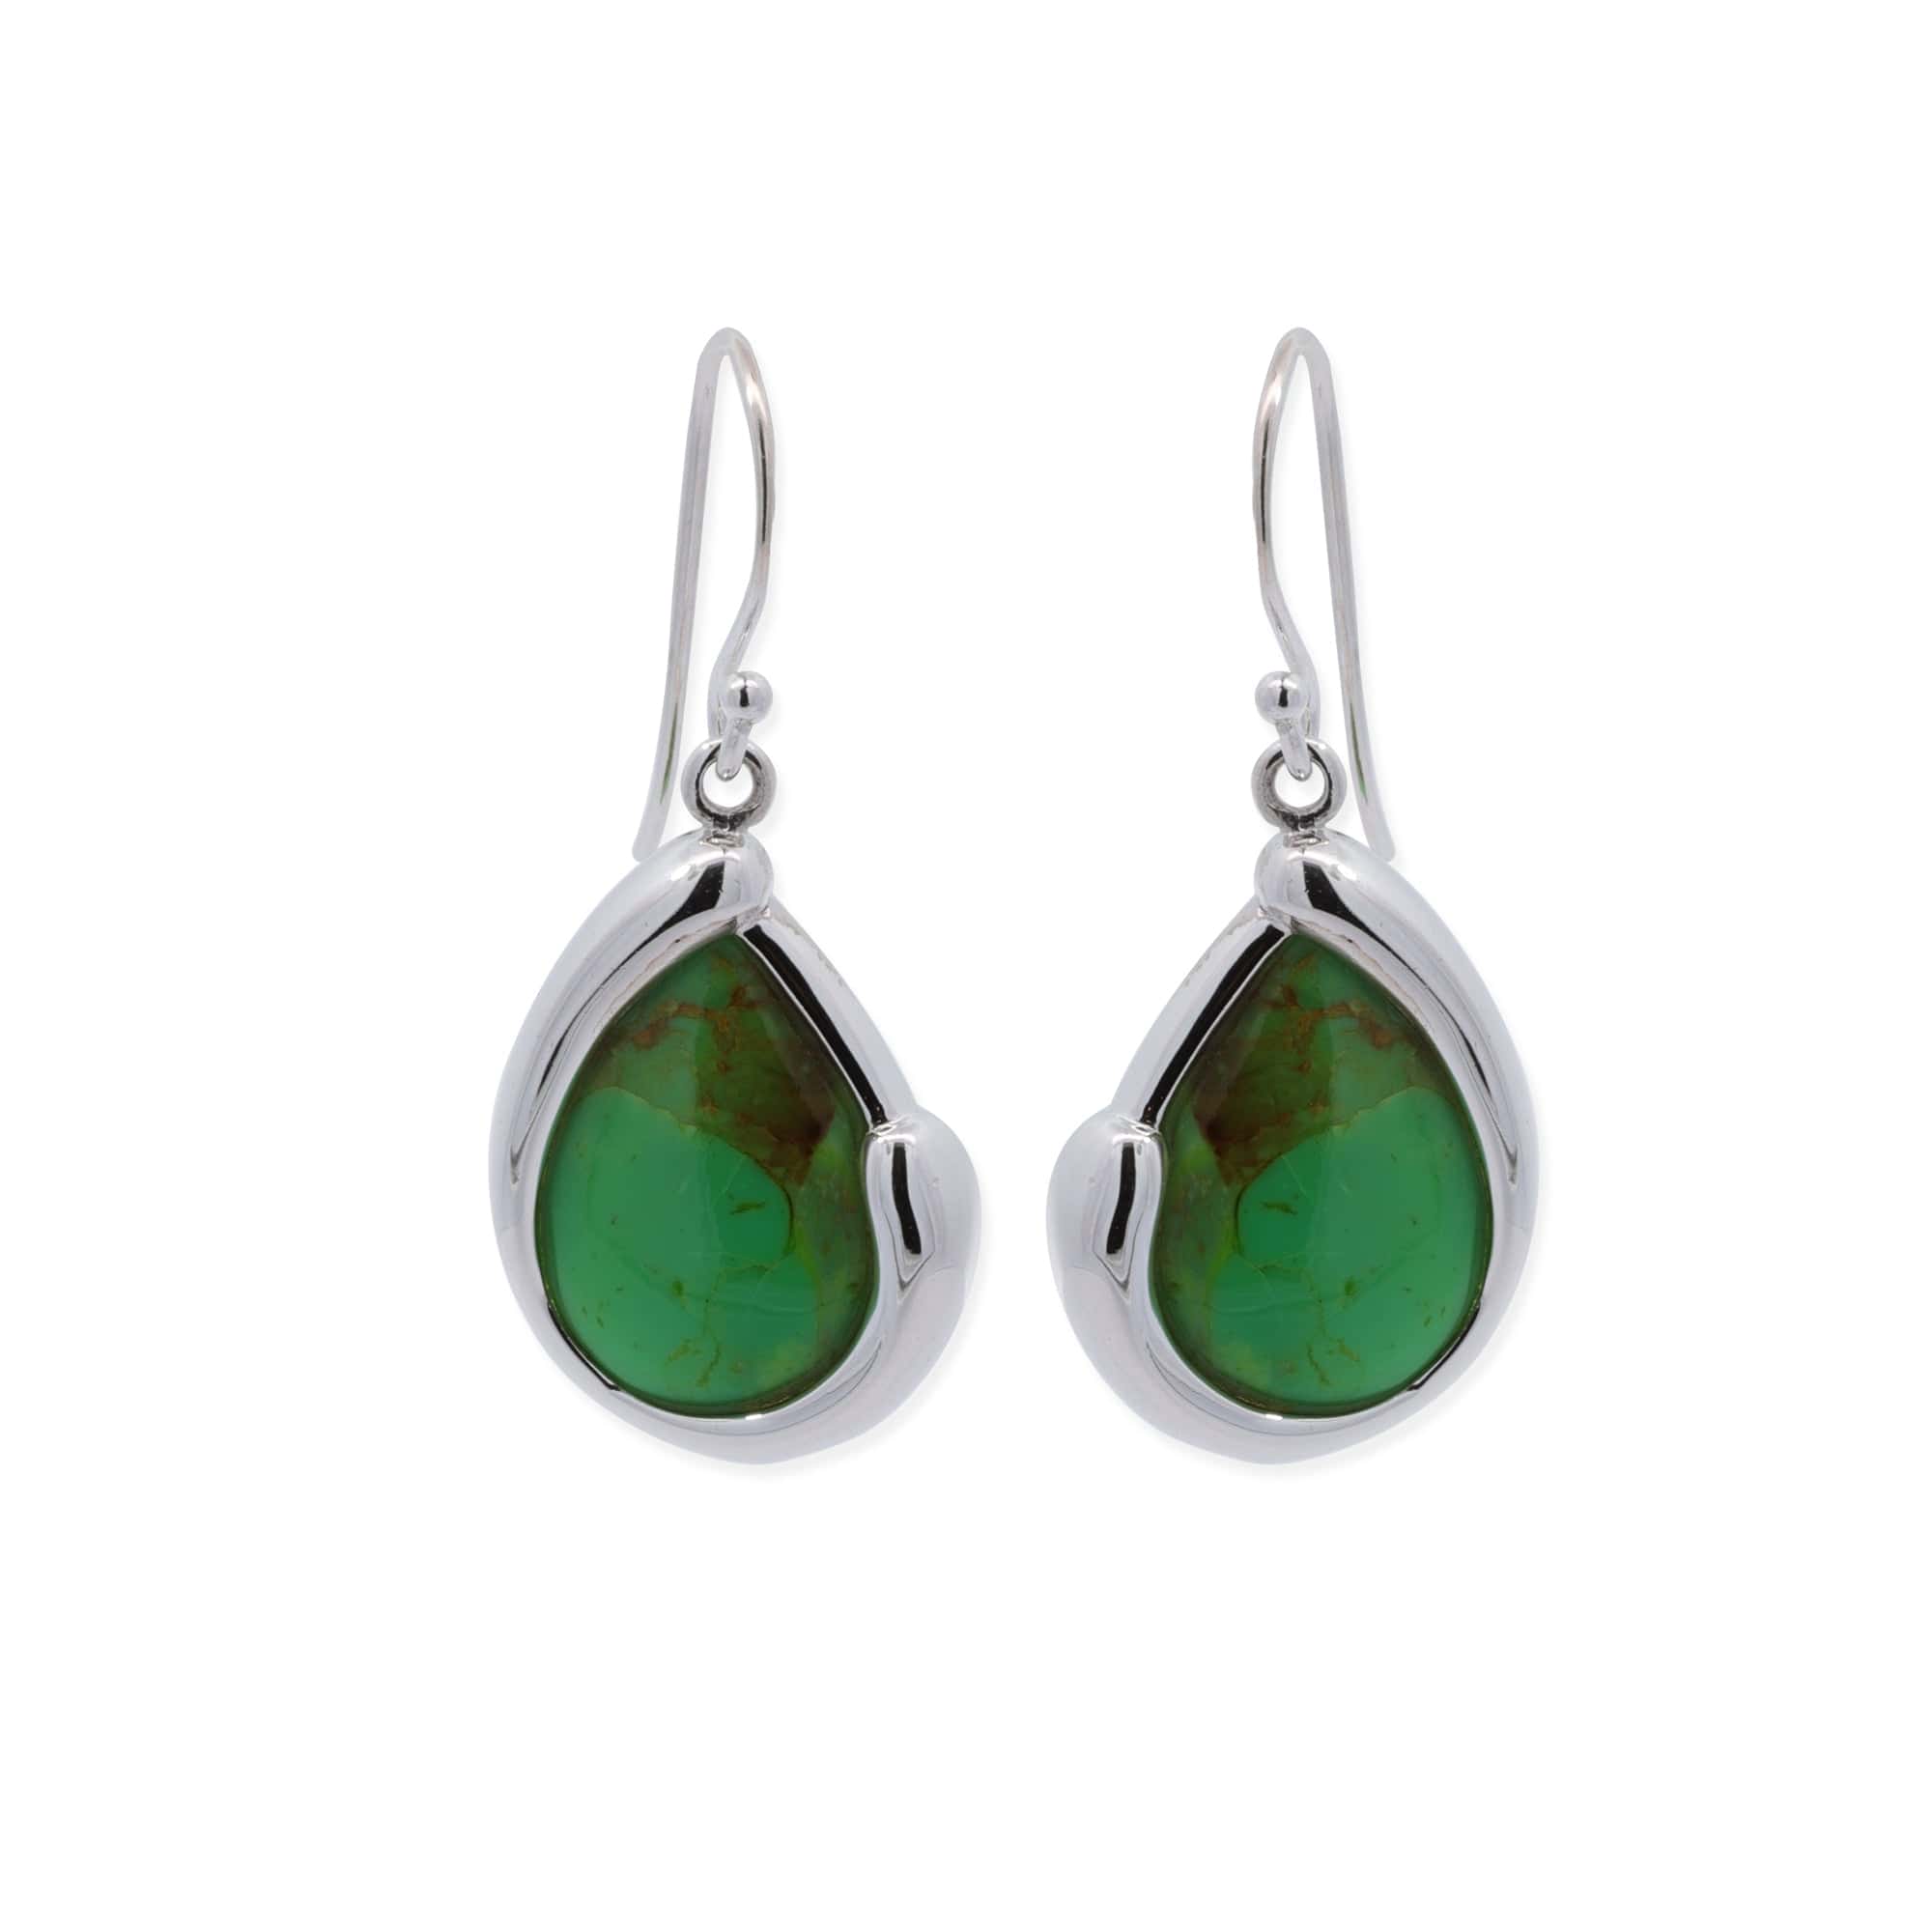 Boma Jewelry Earrings Green Turquoise Organic Drop Shape Dangle Earrings with Genuine Stone